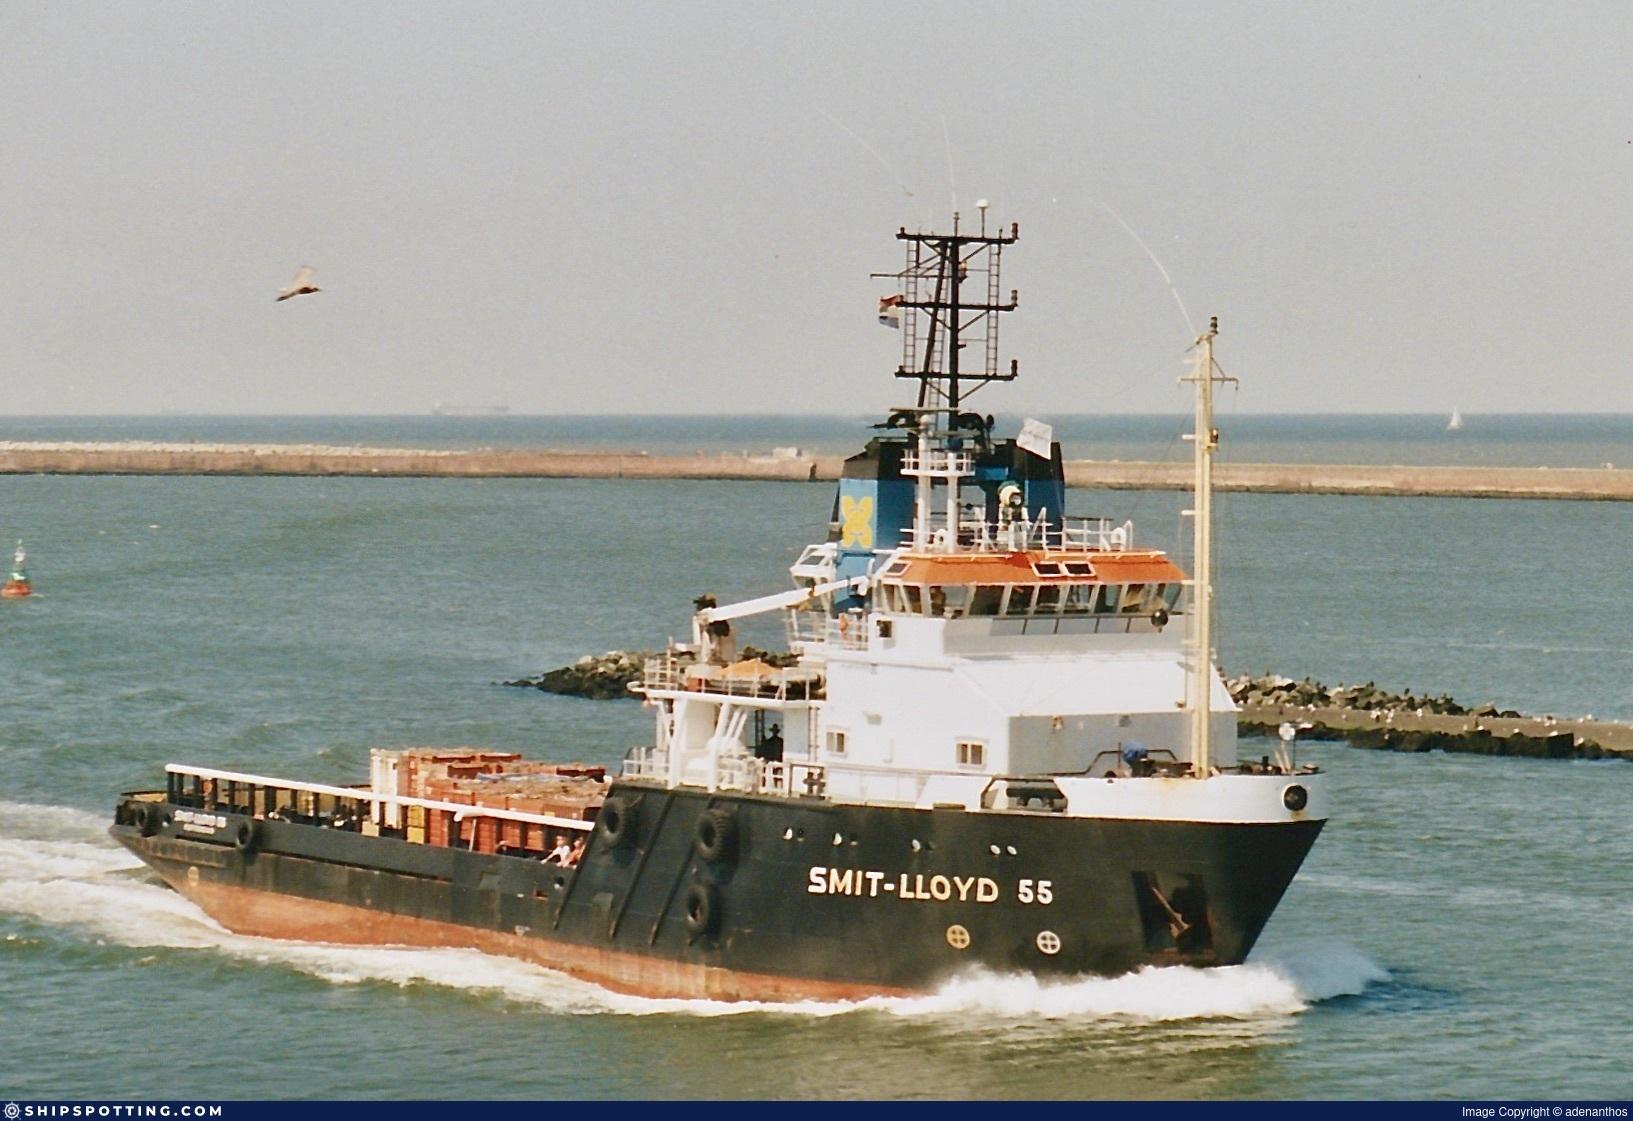 SMIT-LLOYD 55 - IMO 8517633 - ShipSpotting.com - Ship Photos, Information,  Videos and Ship Tracker